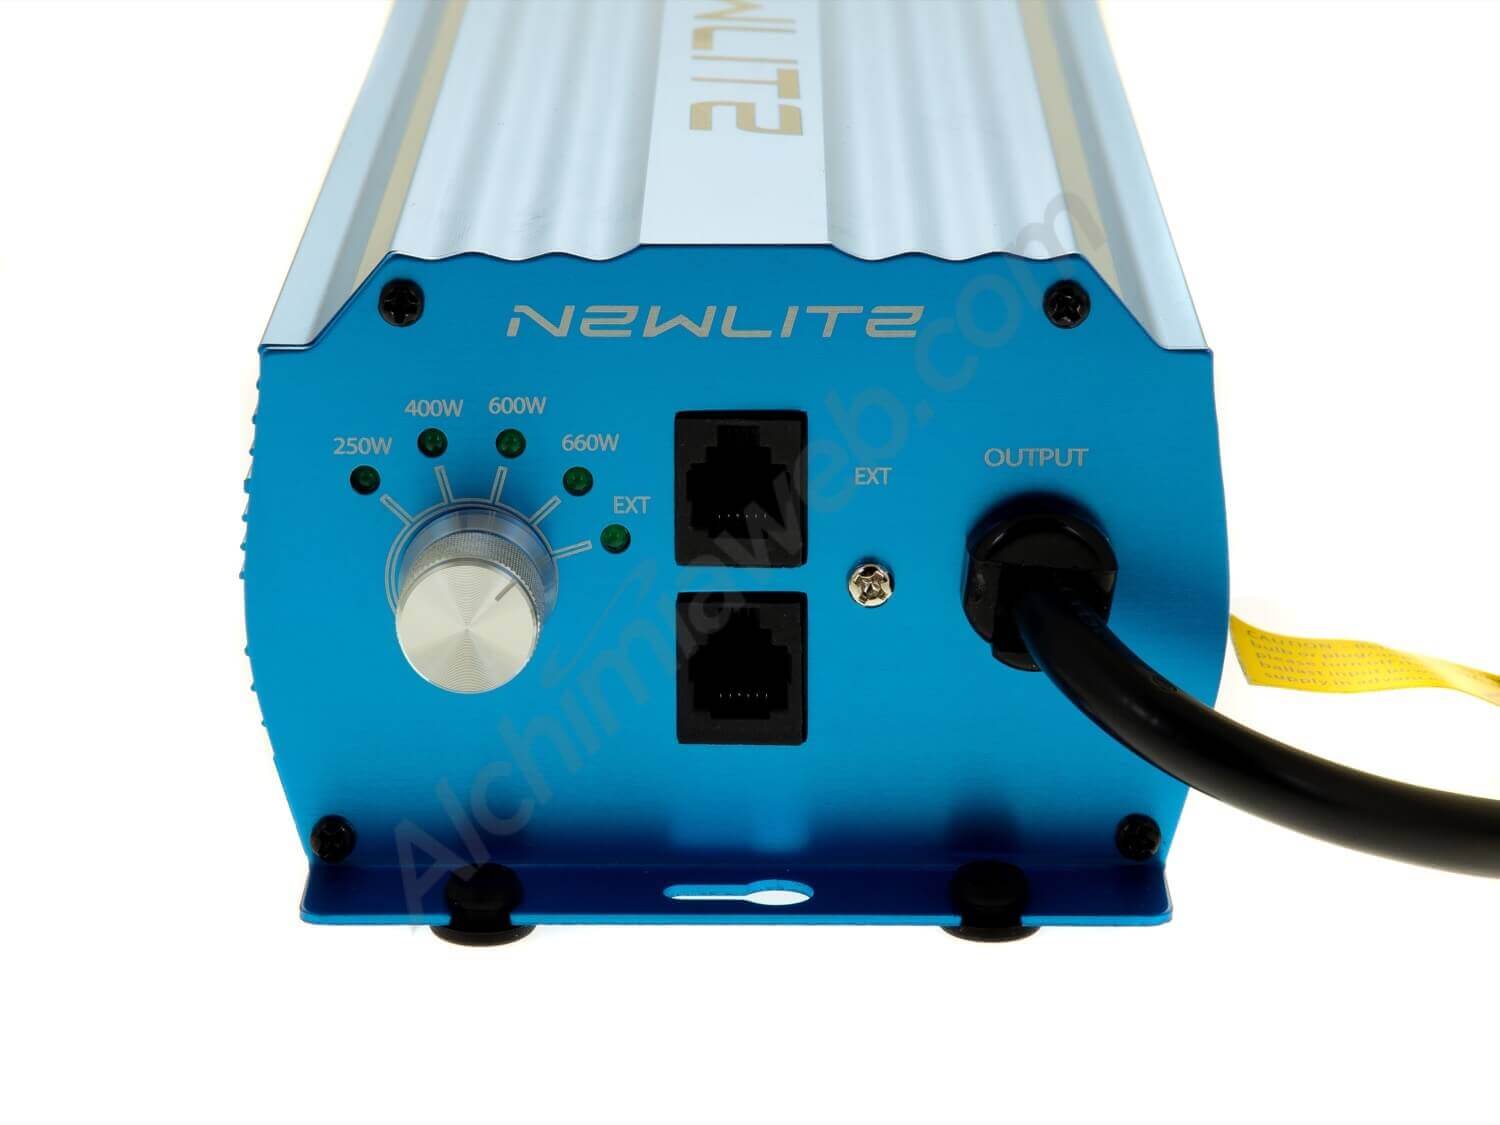 Vente de Ballast Digital Newlite e-blue 600W avec potentiomètre